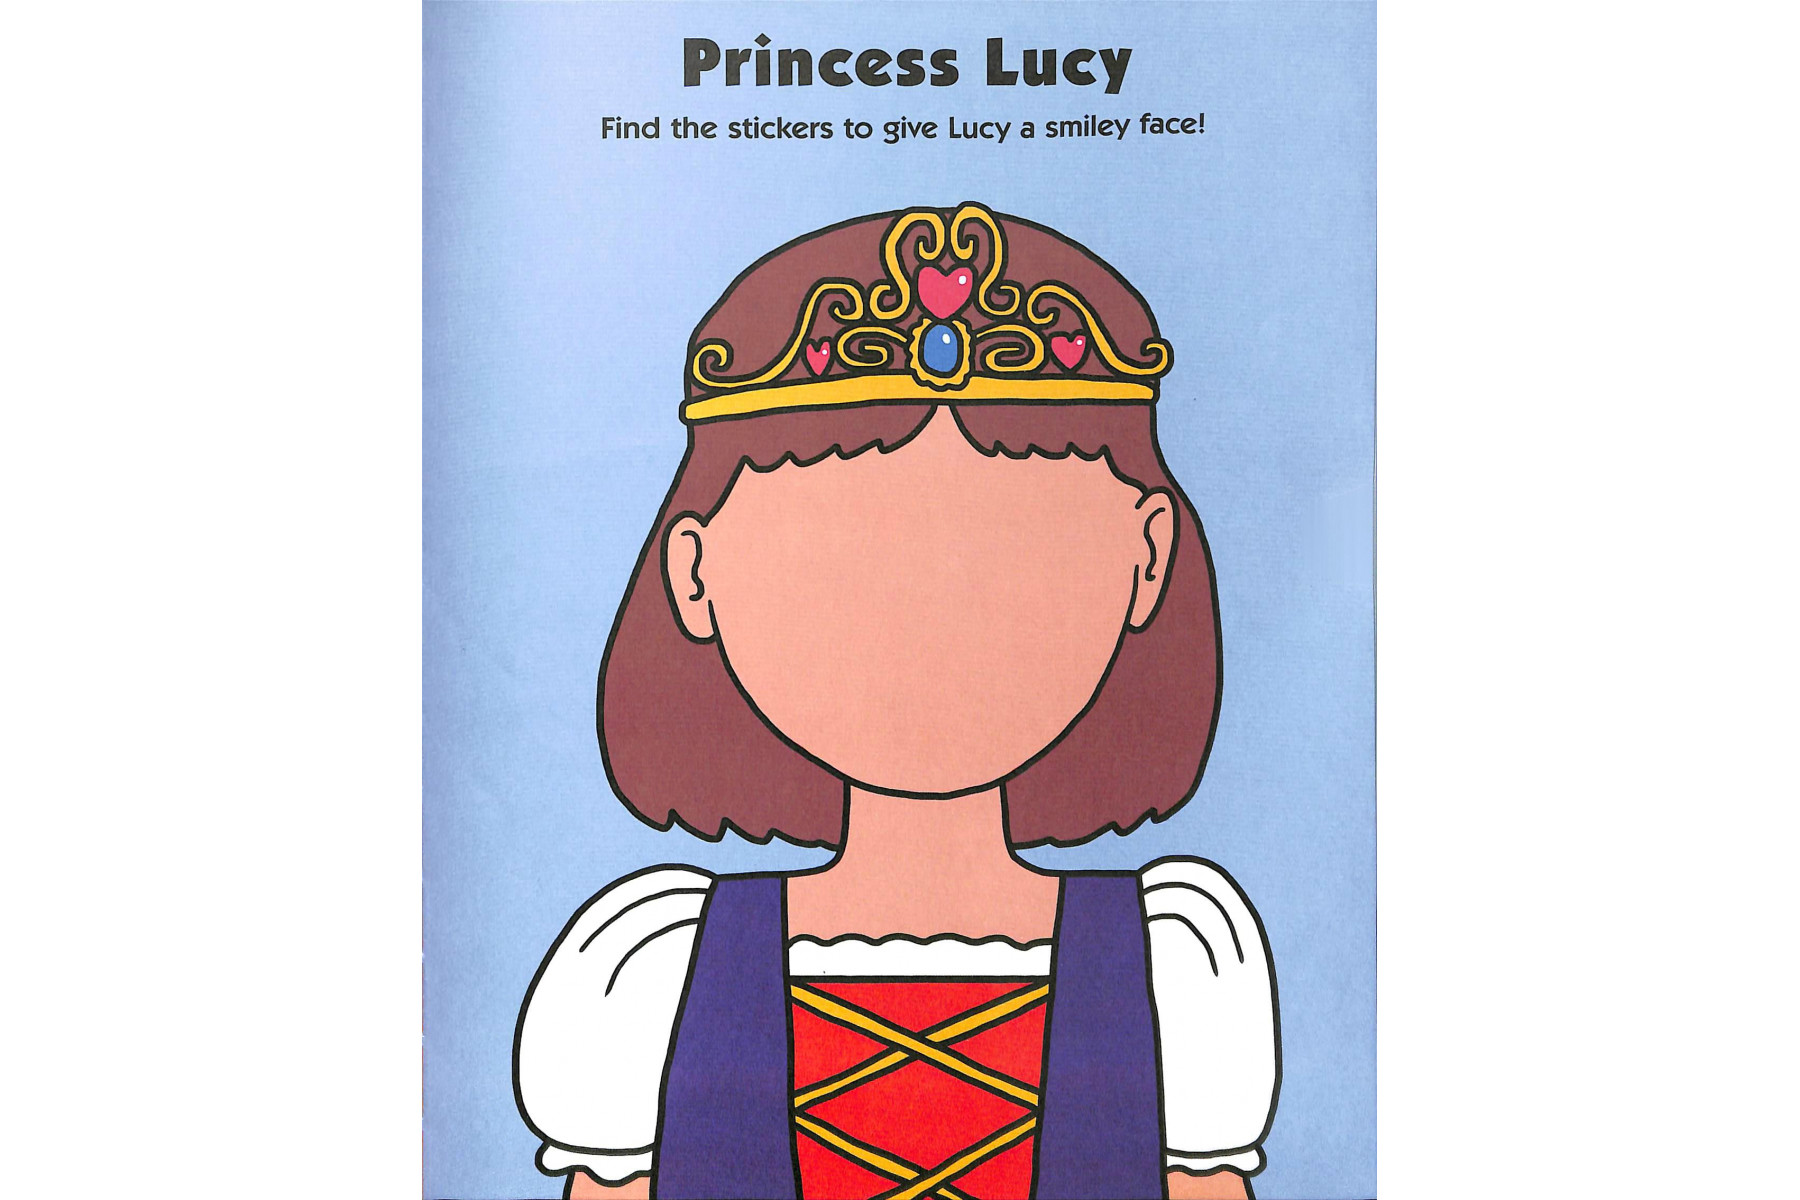 Princess Sticker Activity Book (Preschool Sticker Activity Books